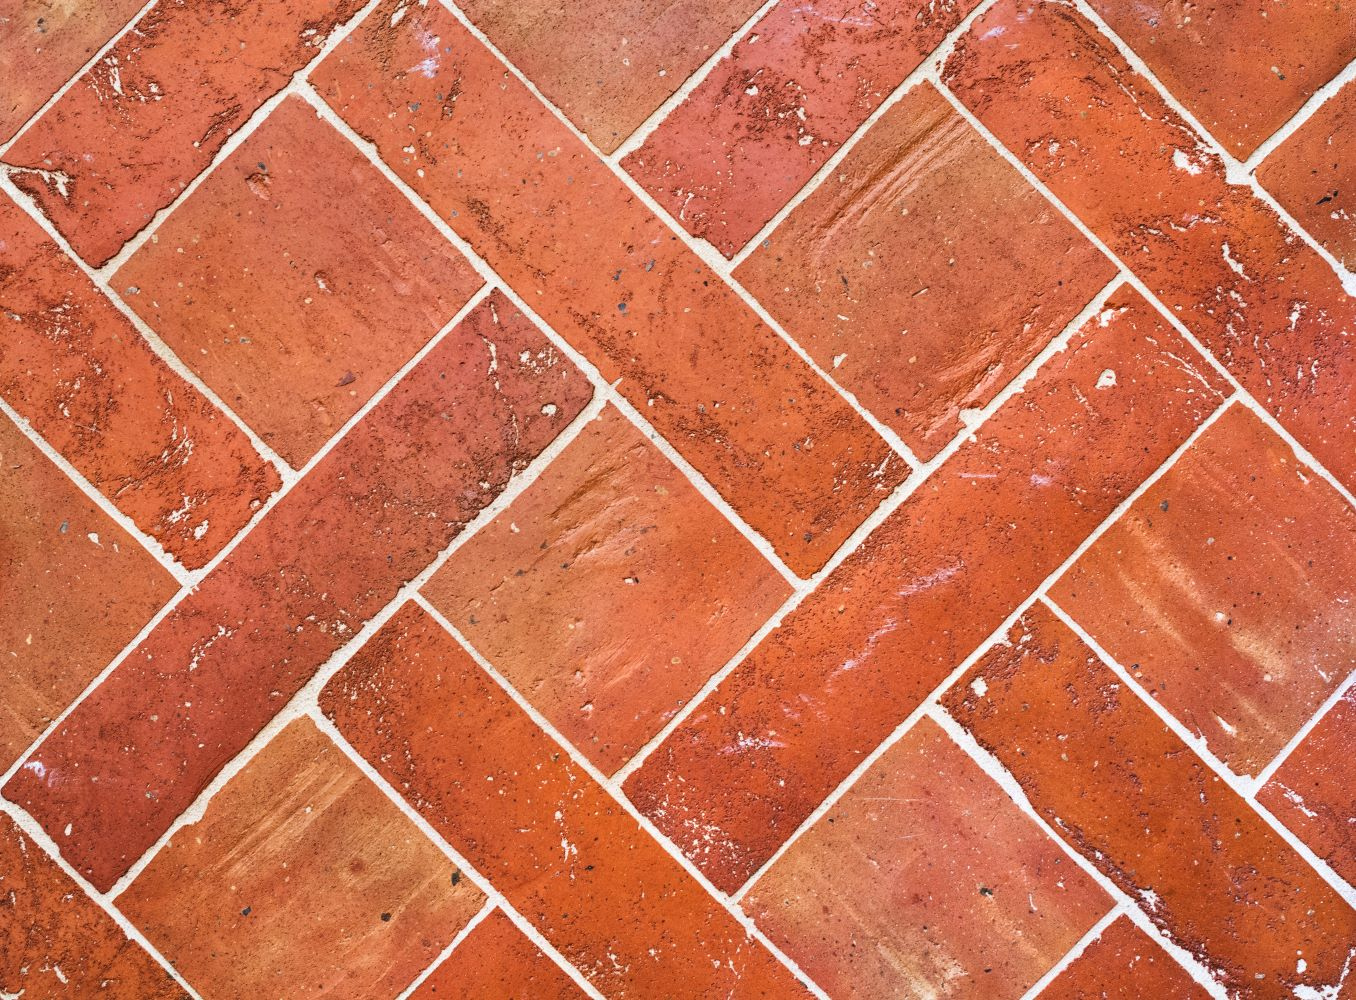 clay brick paver patterns